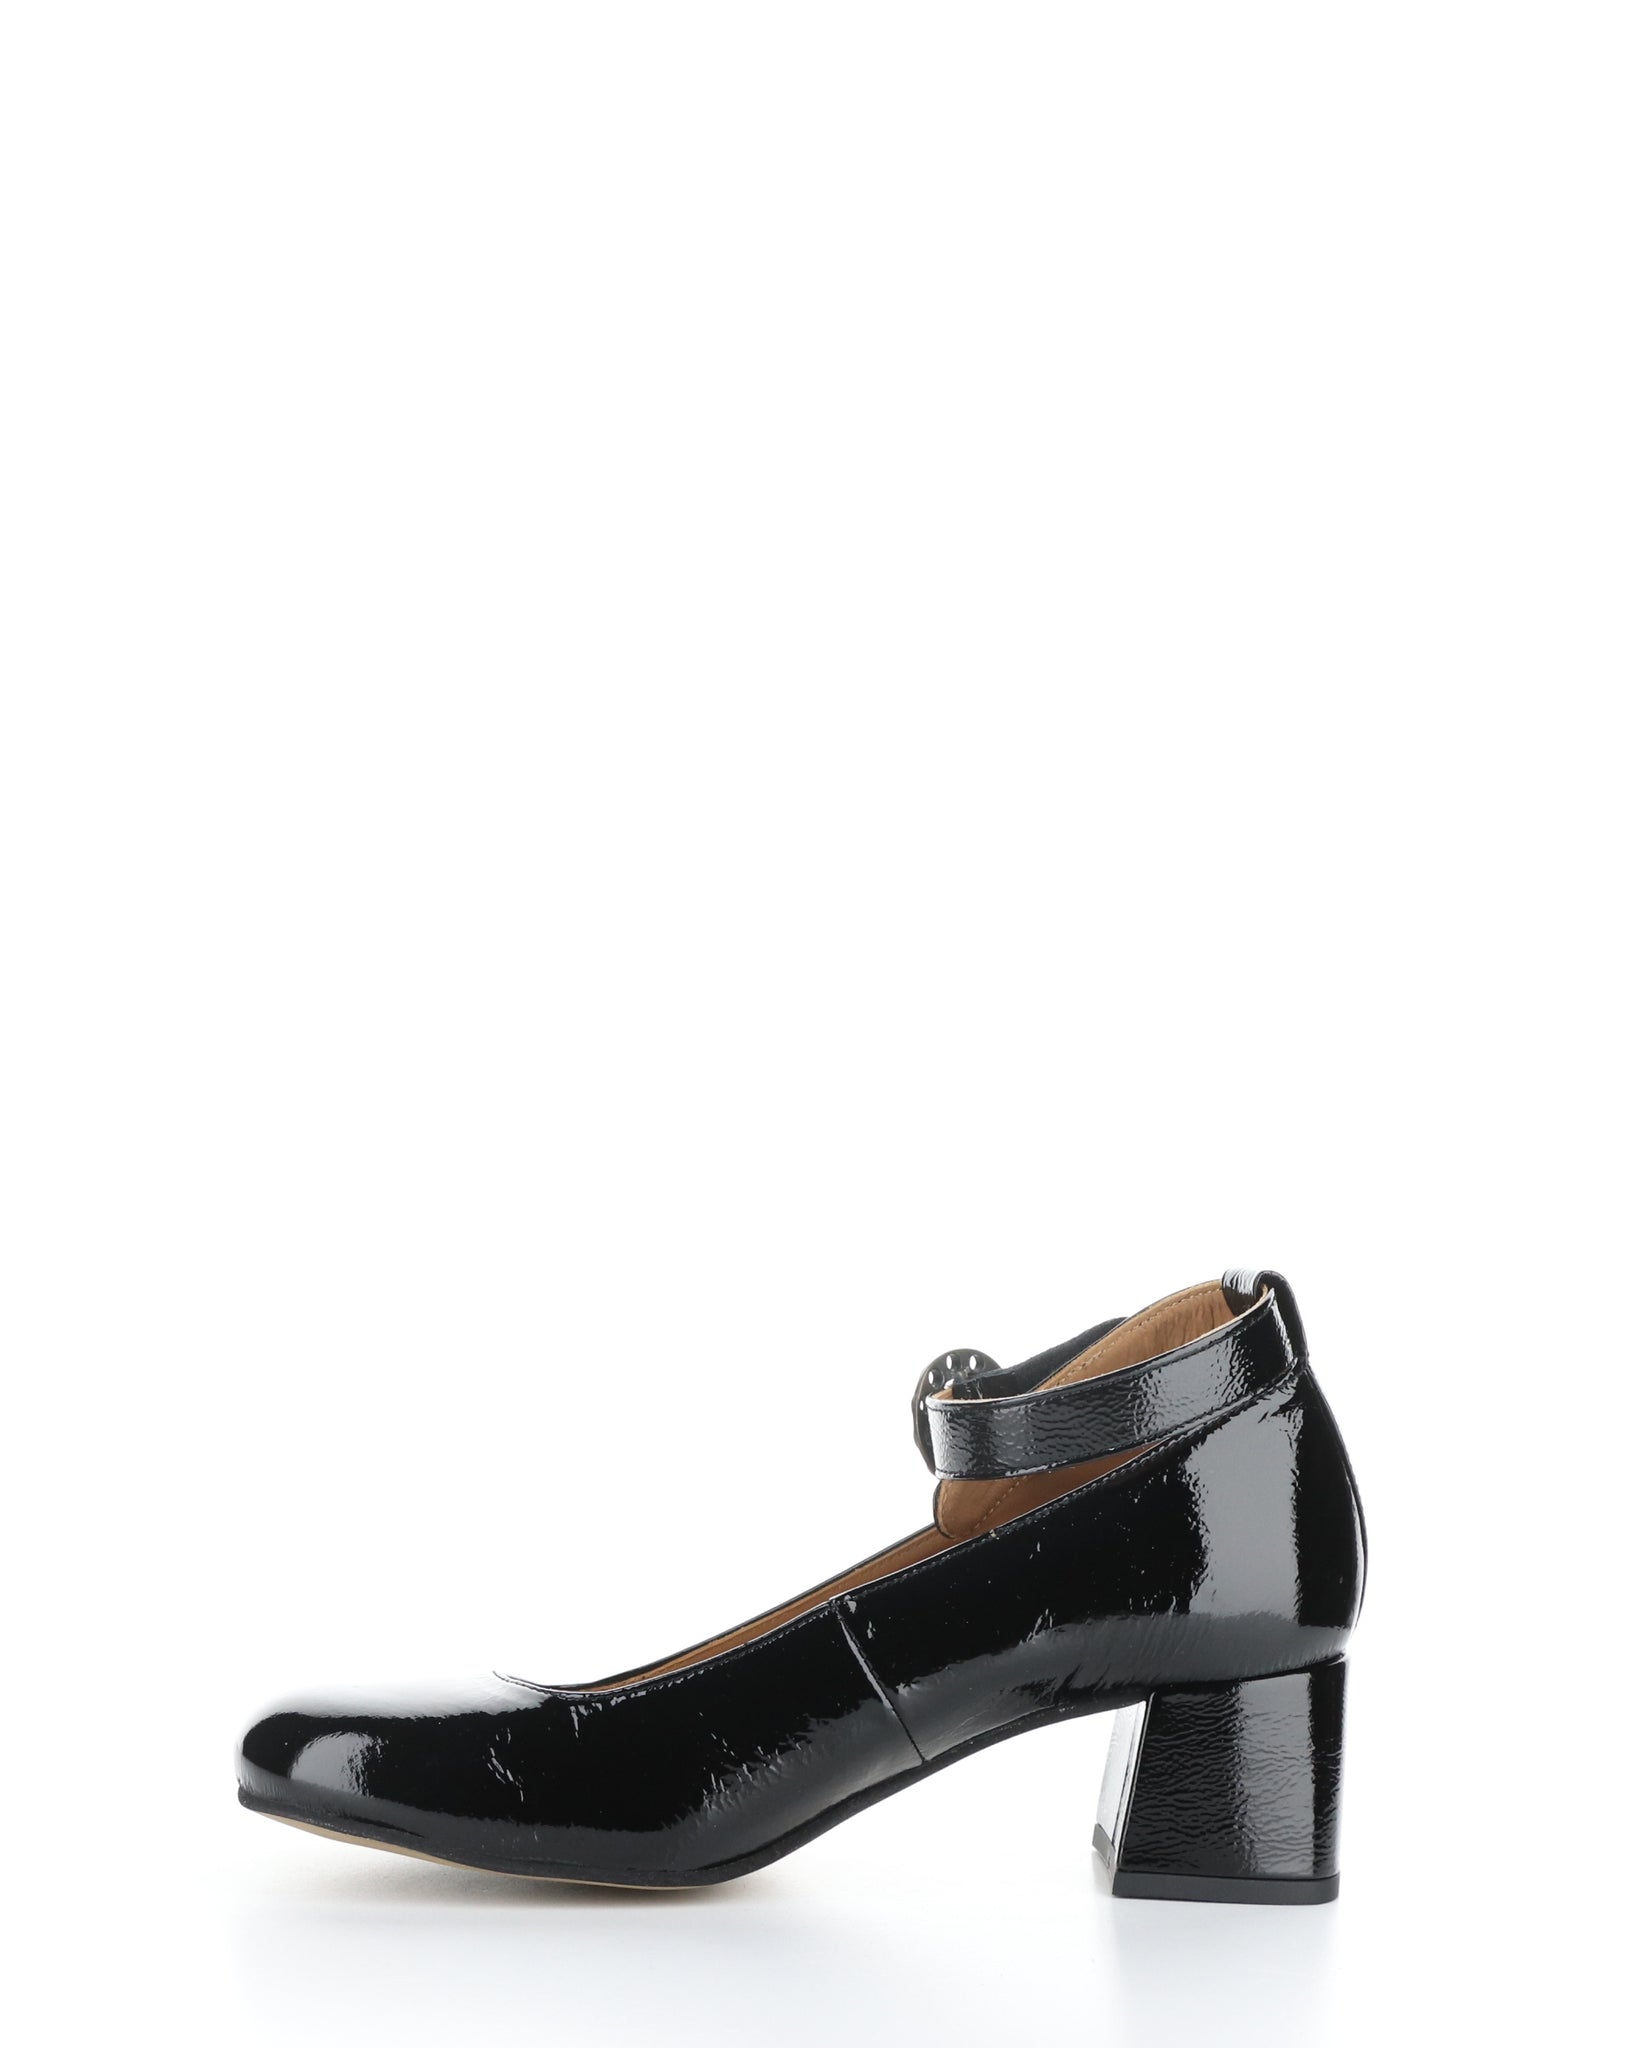 Fly London "Sazi" Black patent dress shoe